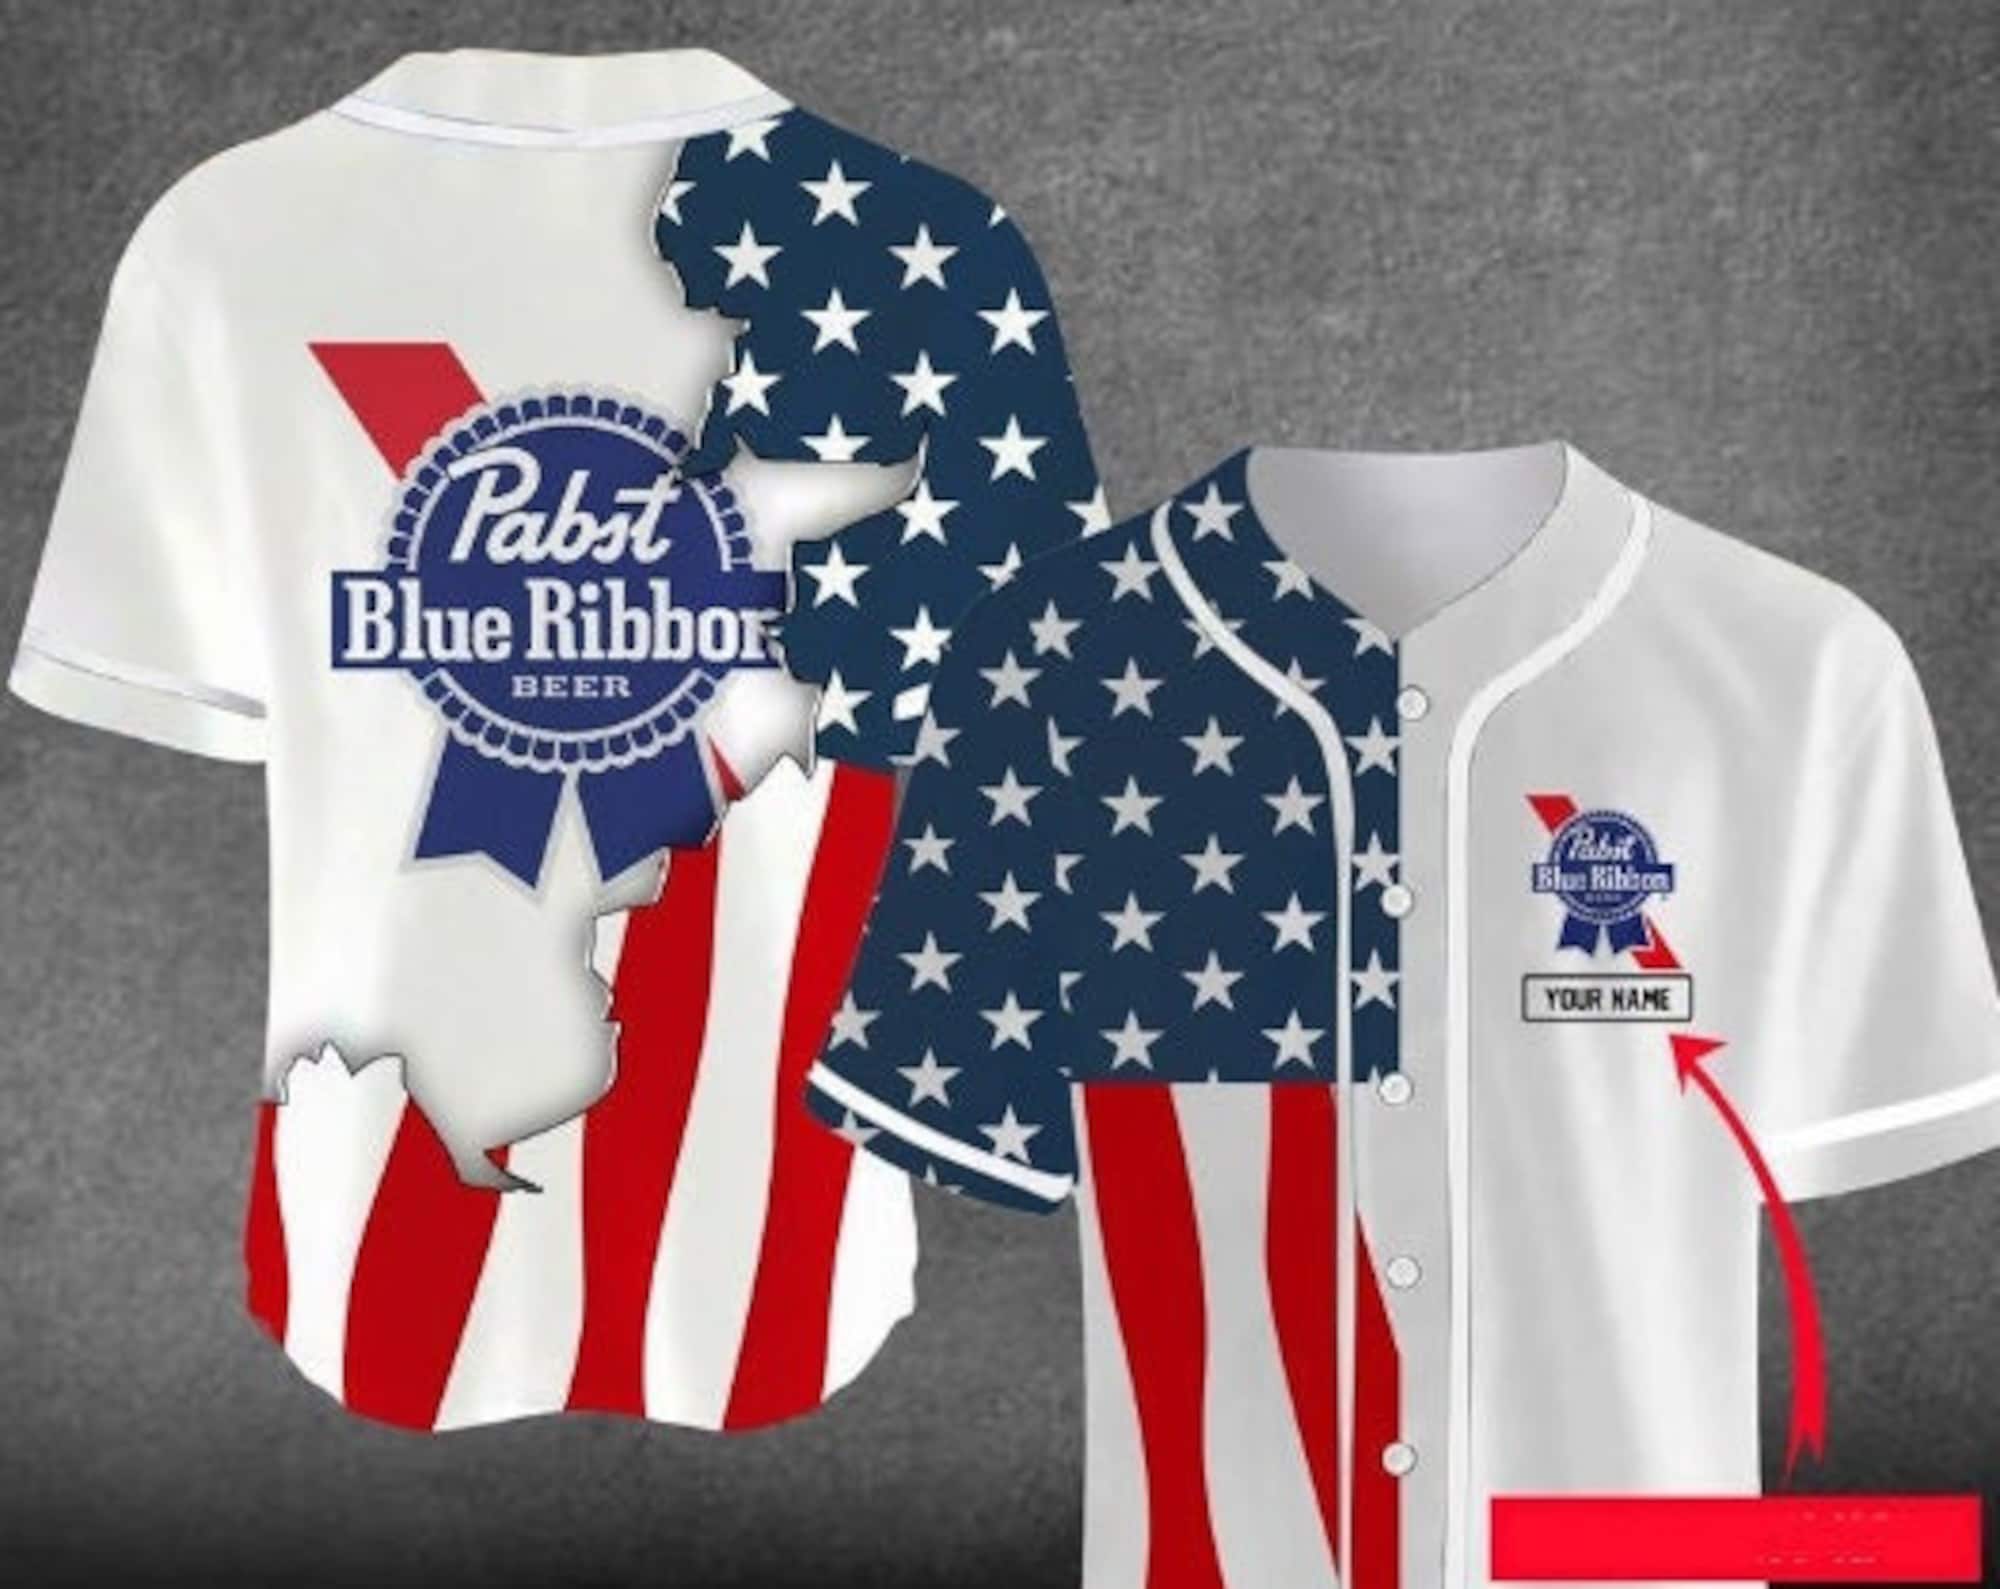 Personalized US Flag Pabst Blue Ribbon Baseball Jersey